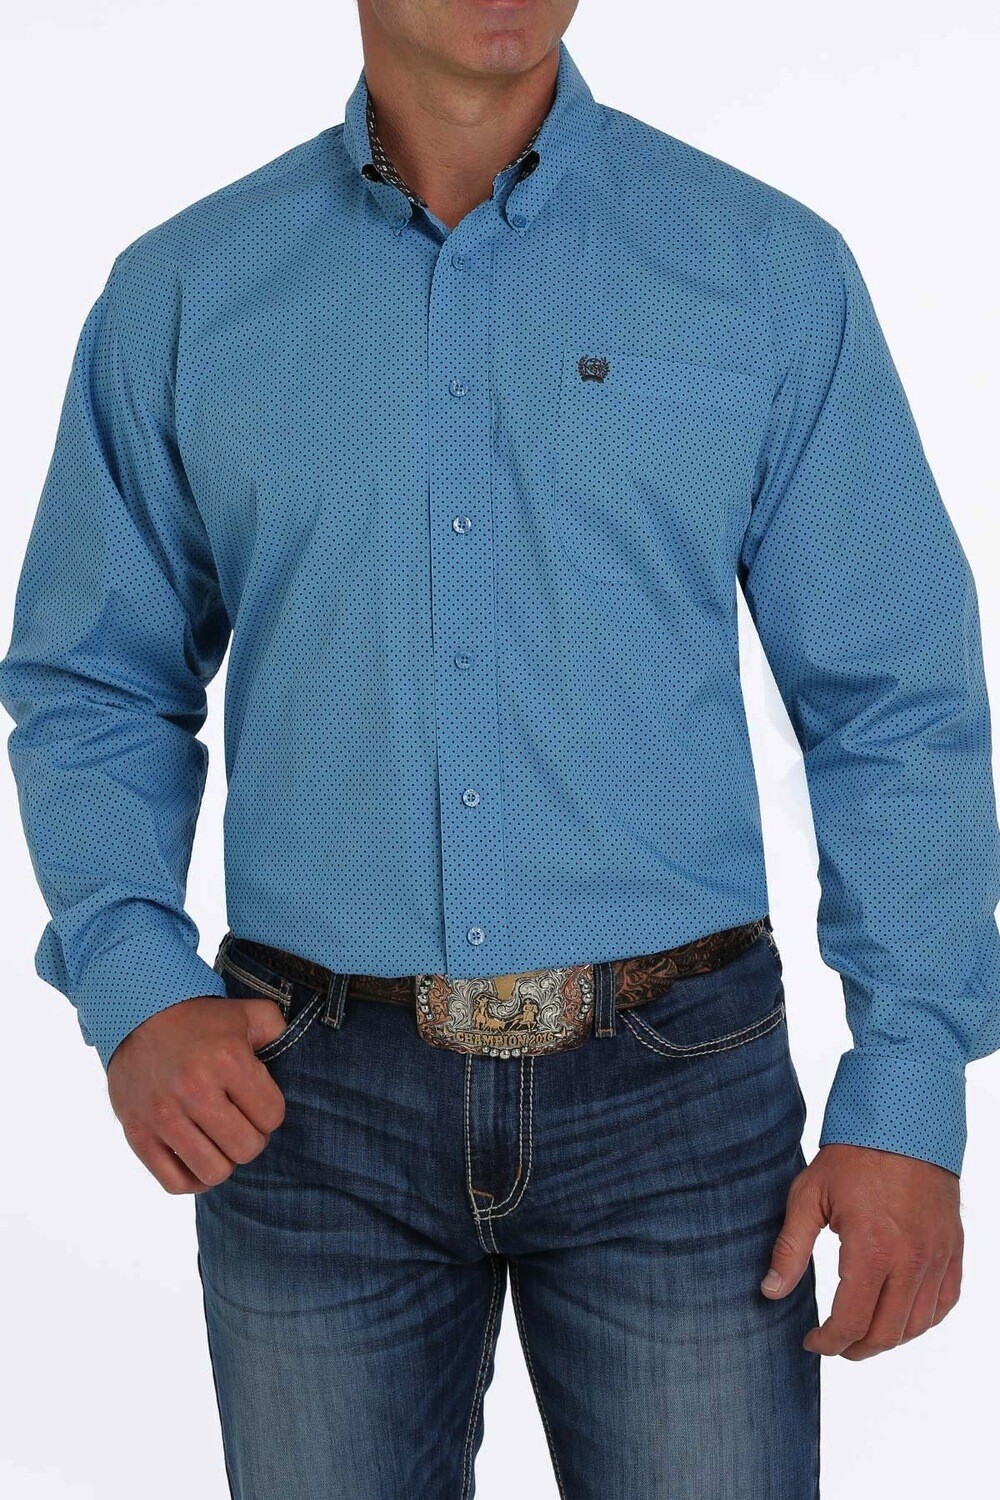 Cinch Men's Blue w/Black Dots Button Down Shirt